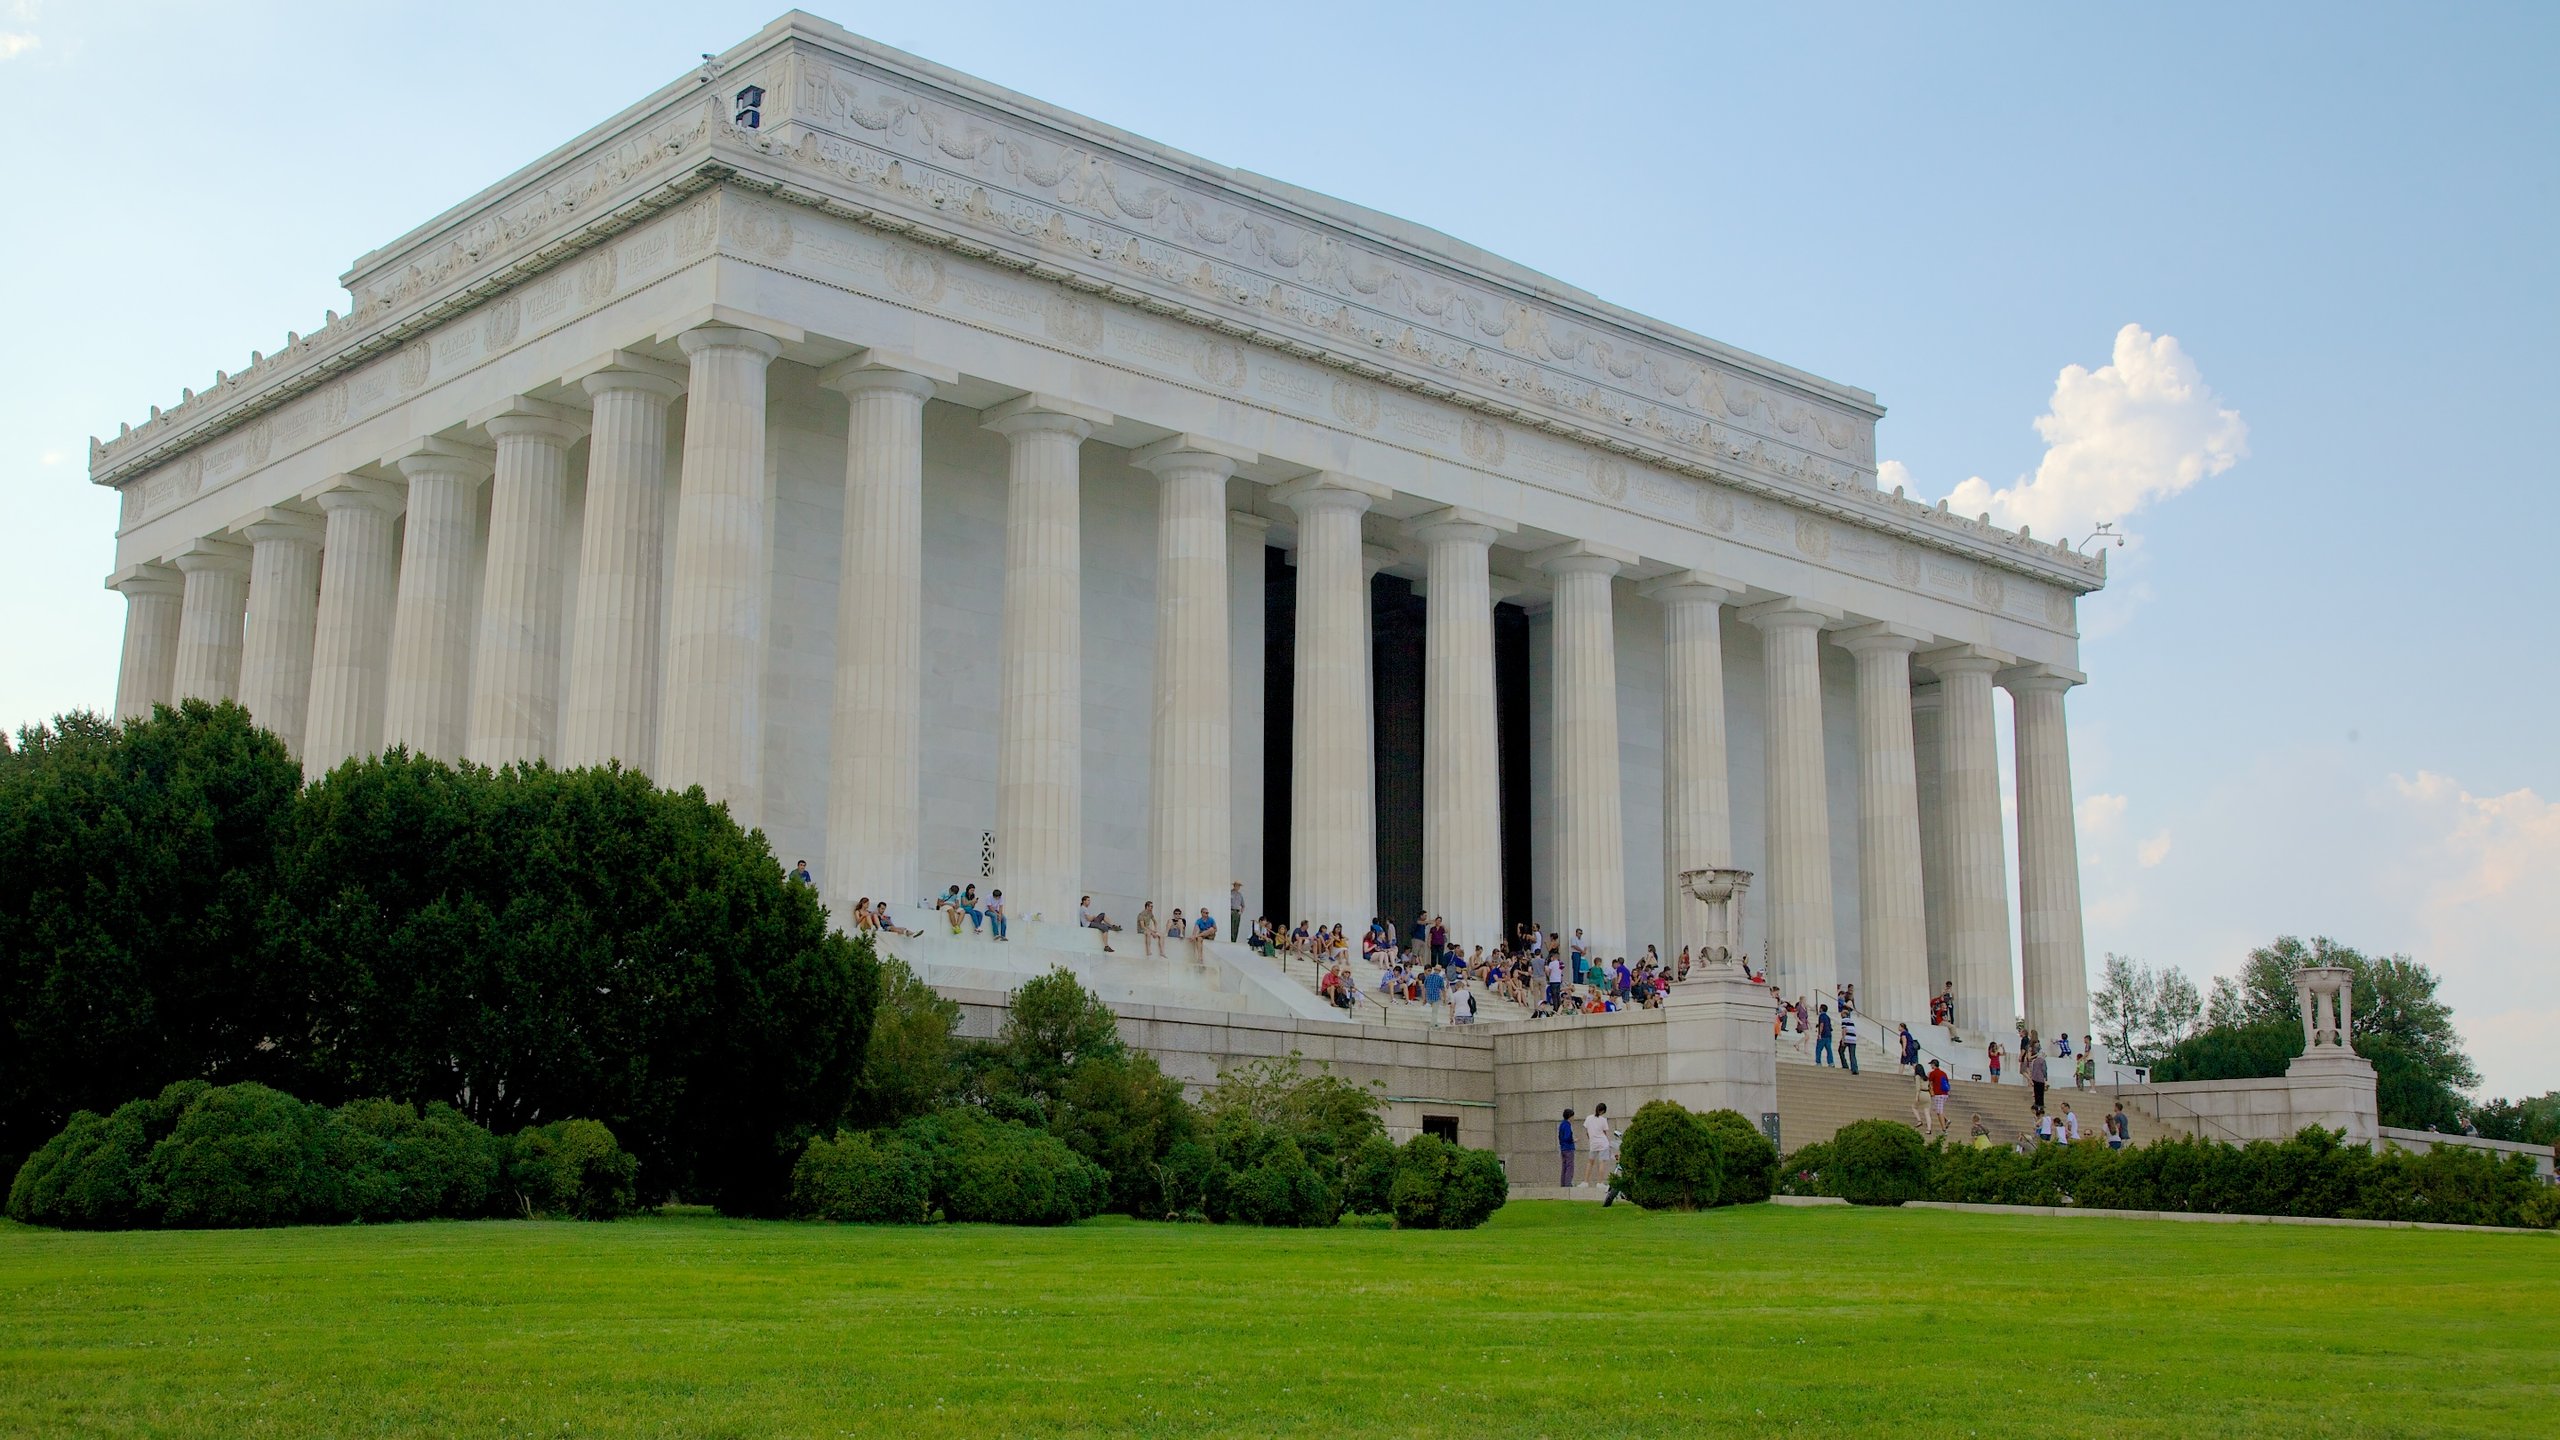 Lincoln Memorial, Washington, District of Columbia, US